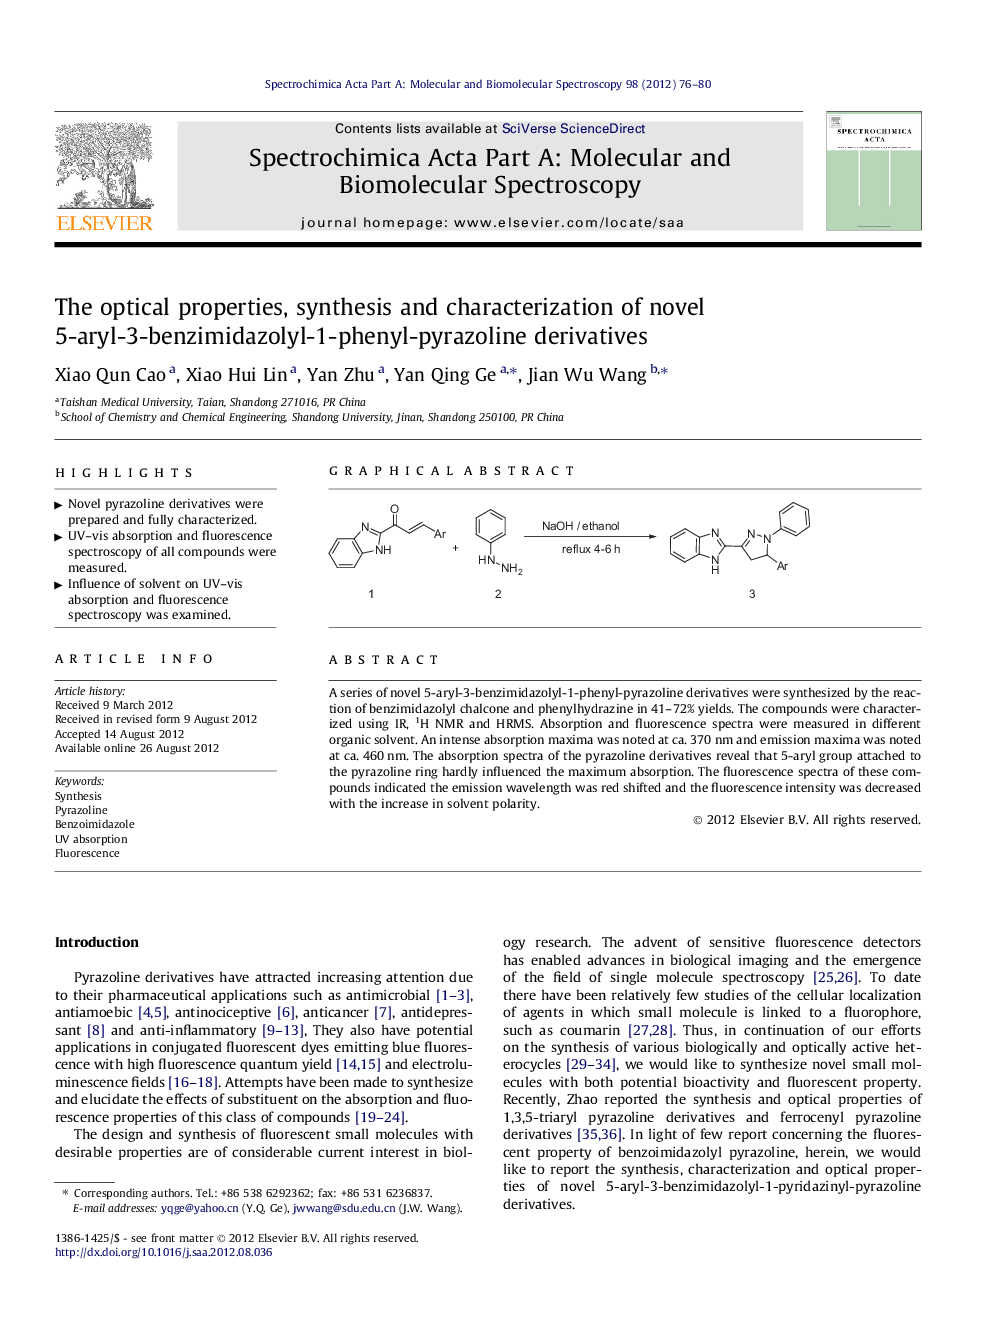 The optical properties, synthesis and characterization of novel 5-aryl-3-benzimidazolyl-1-phenyl-pyrazoline derivatives